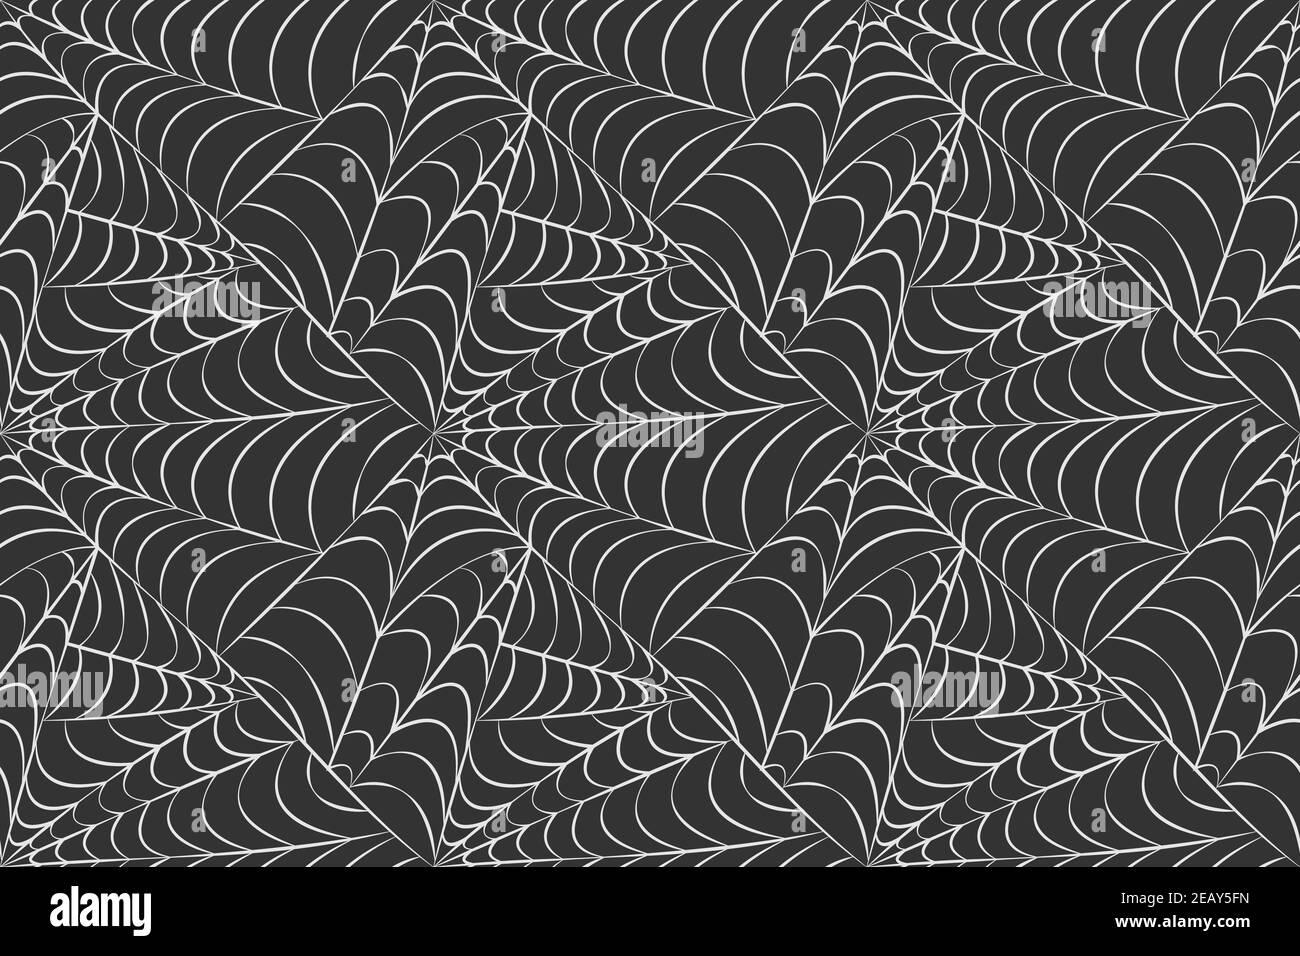 Dark spider web seamless pattern. Stock Vector